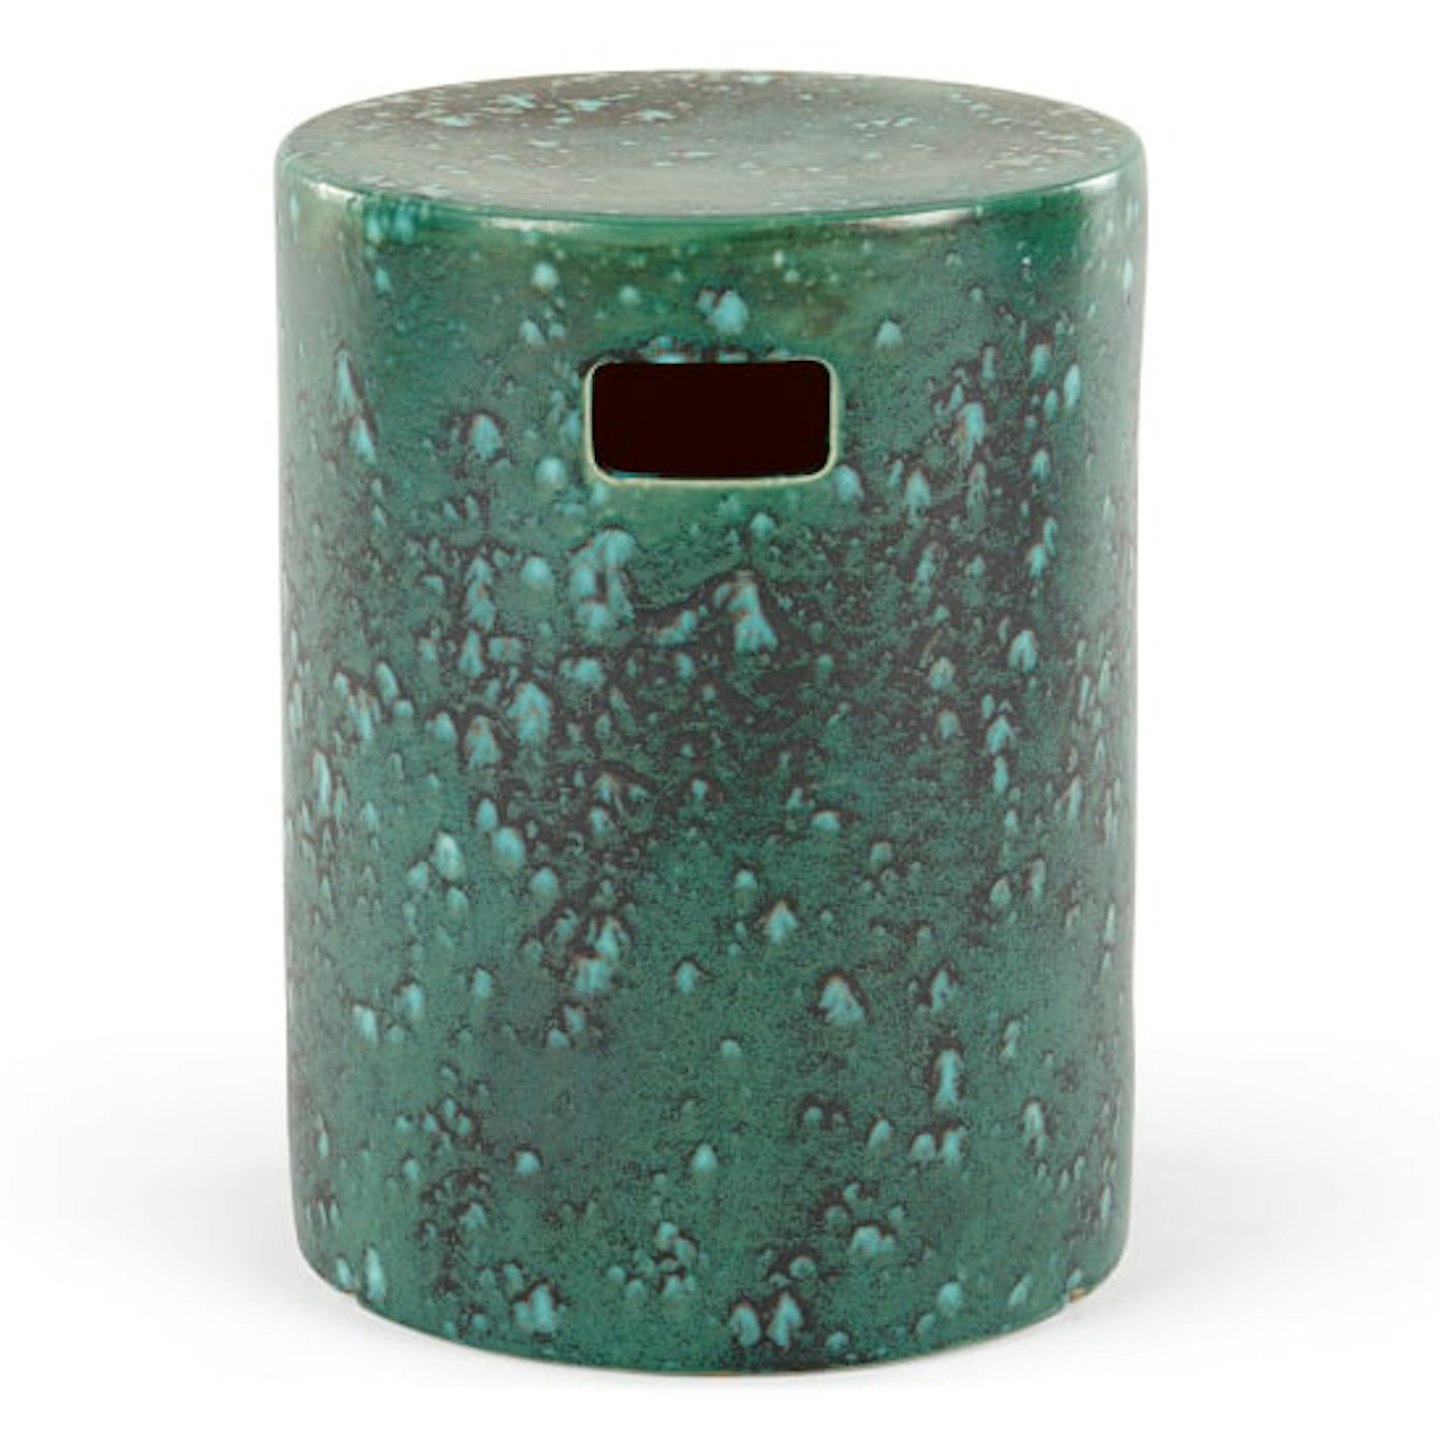 Sacha Reactive Glaze Decorative Stool, Turquoise